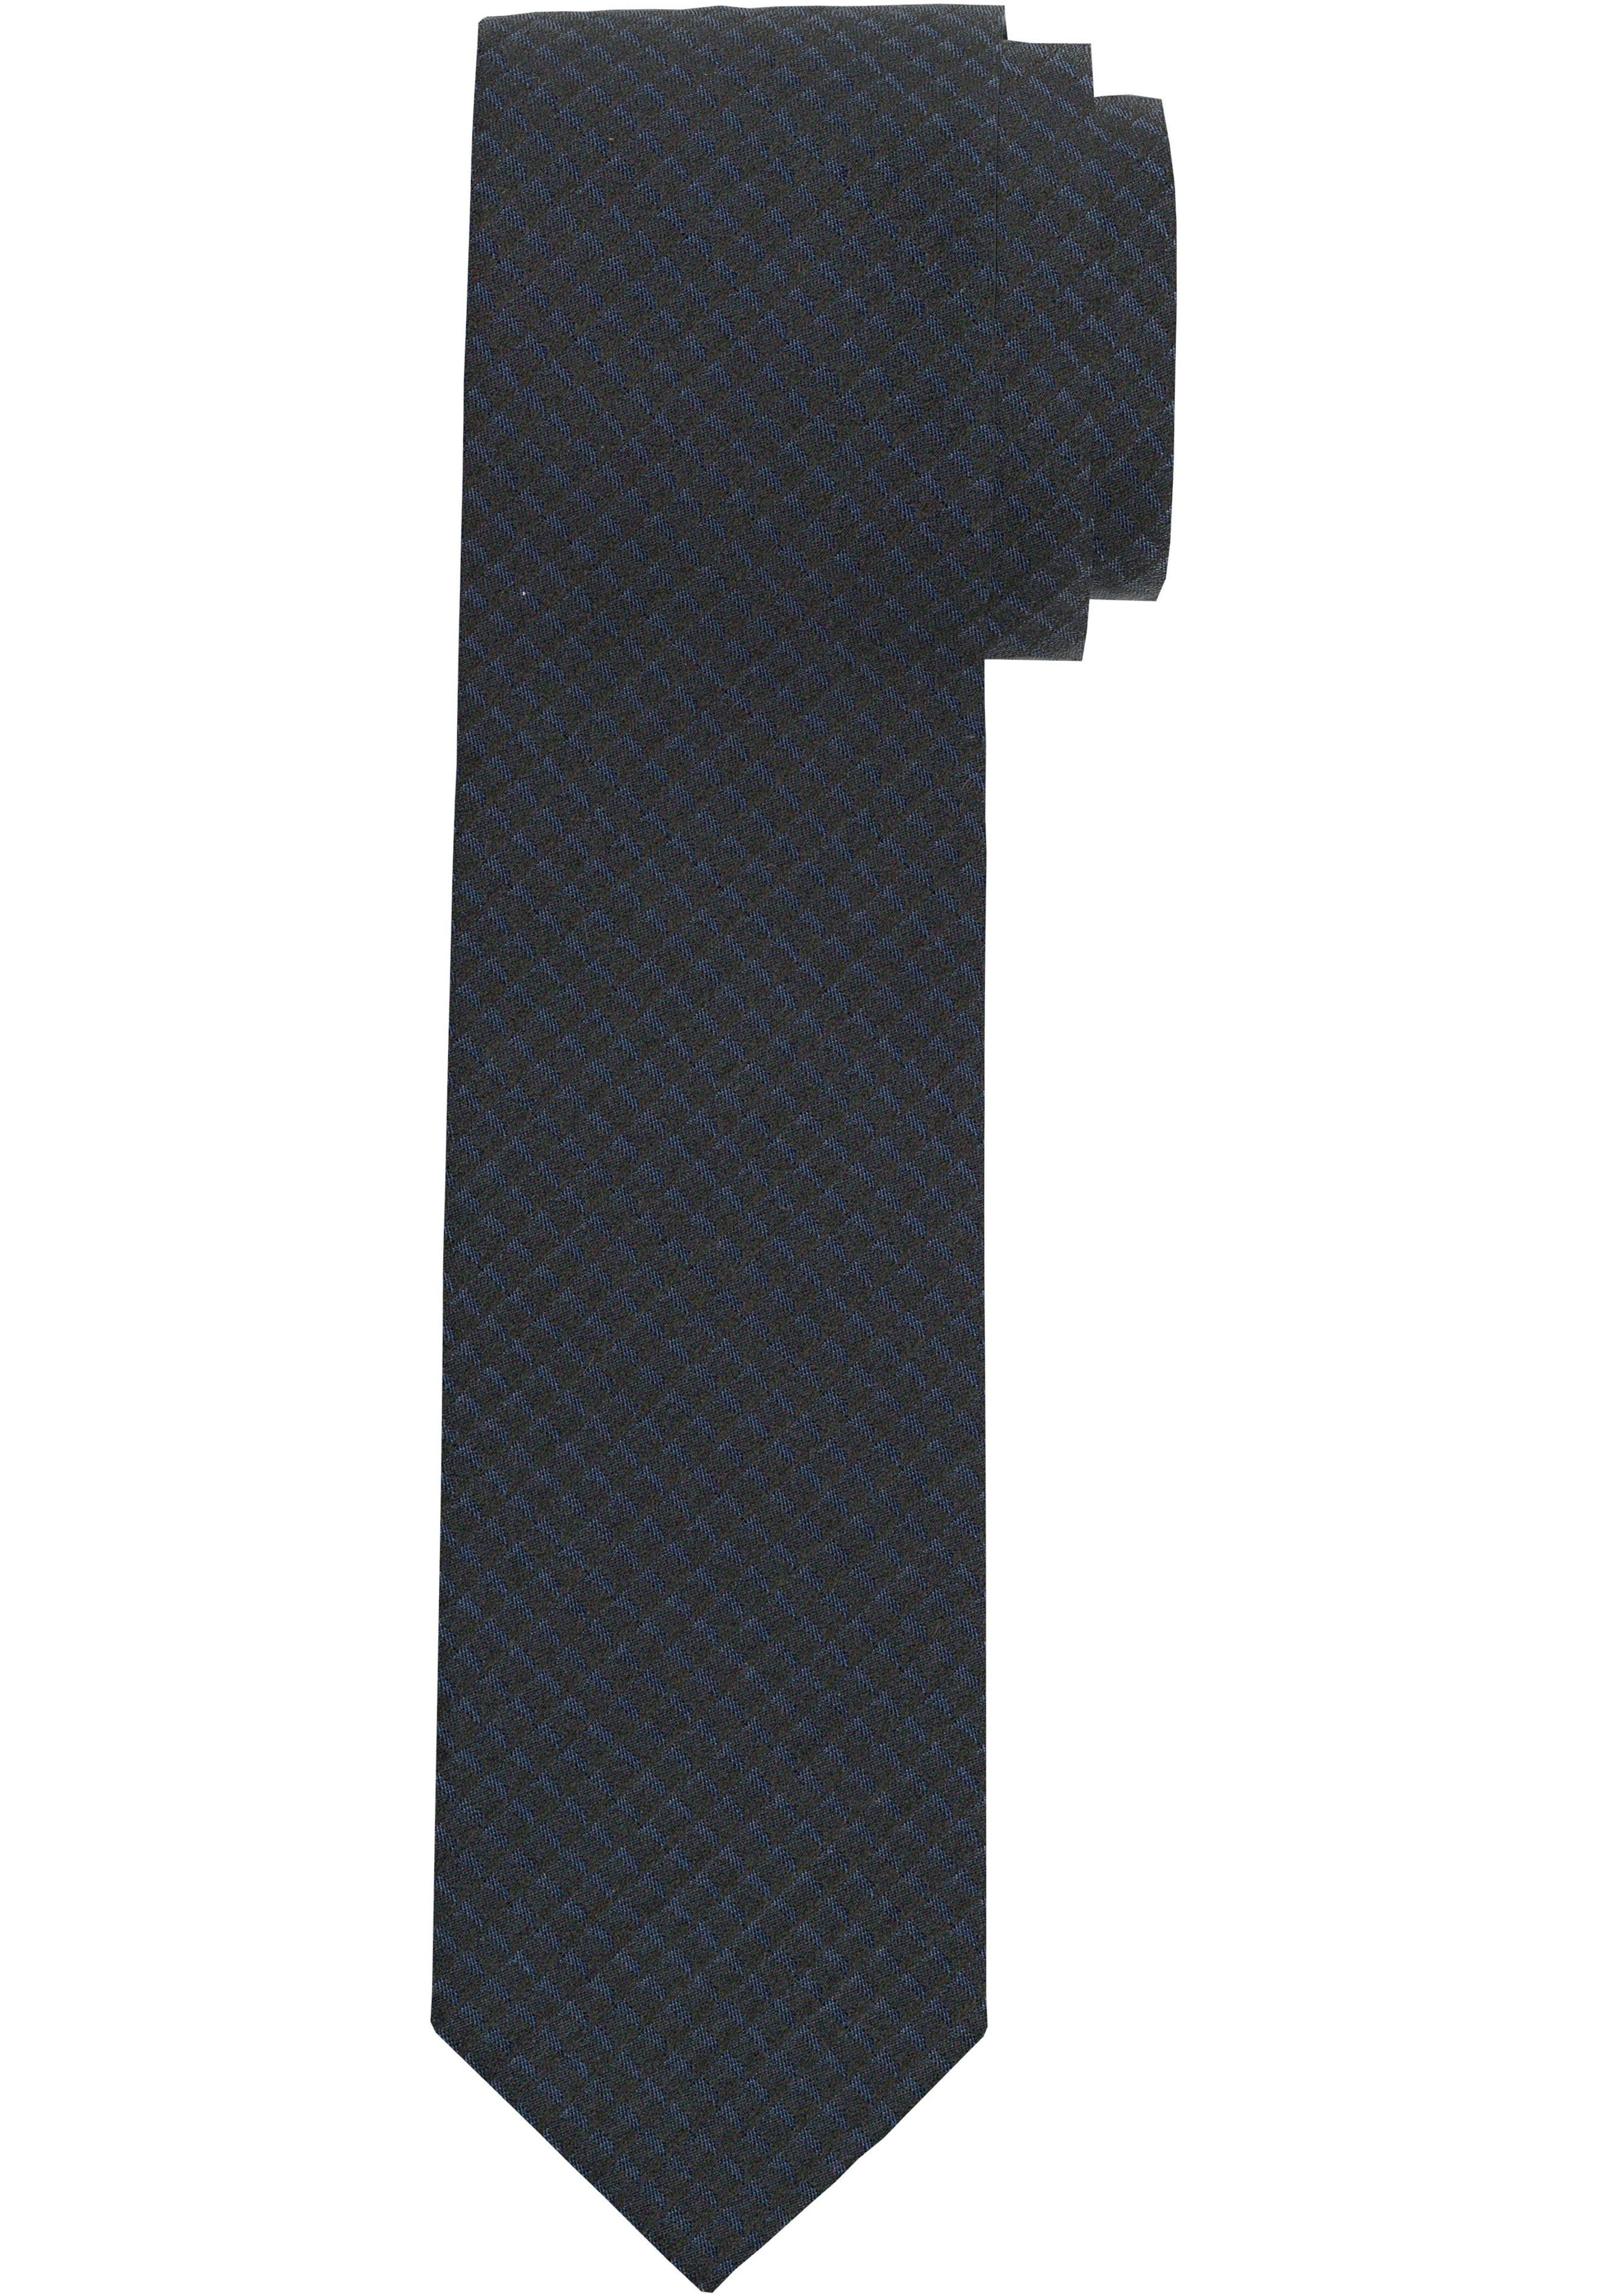 marine OLYMP Krawatte Krawatte mit Strukturmuster